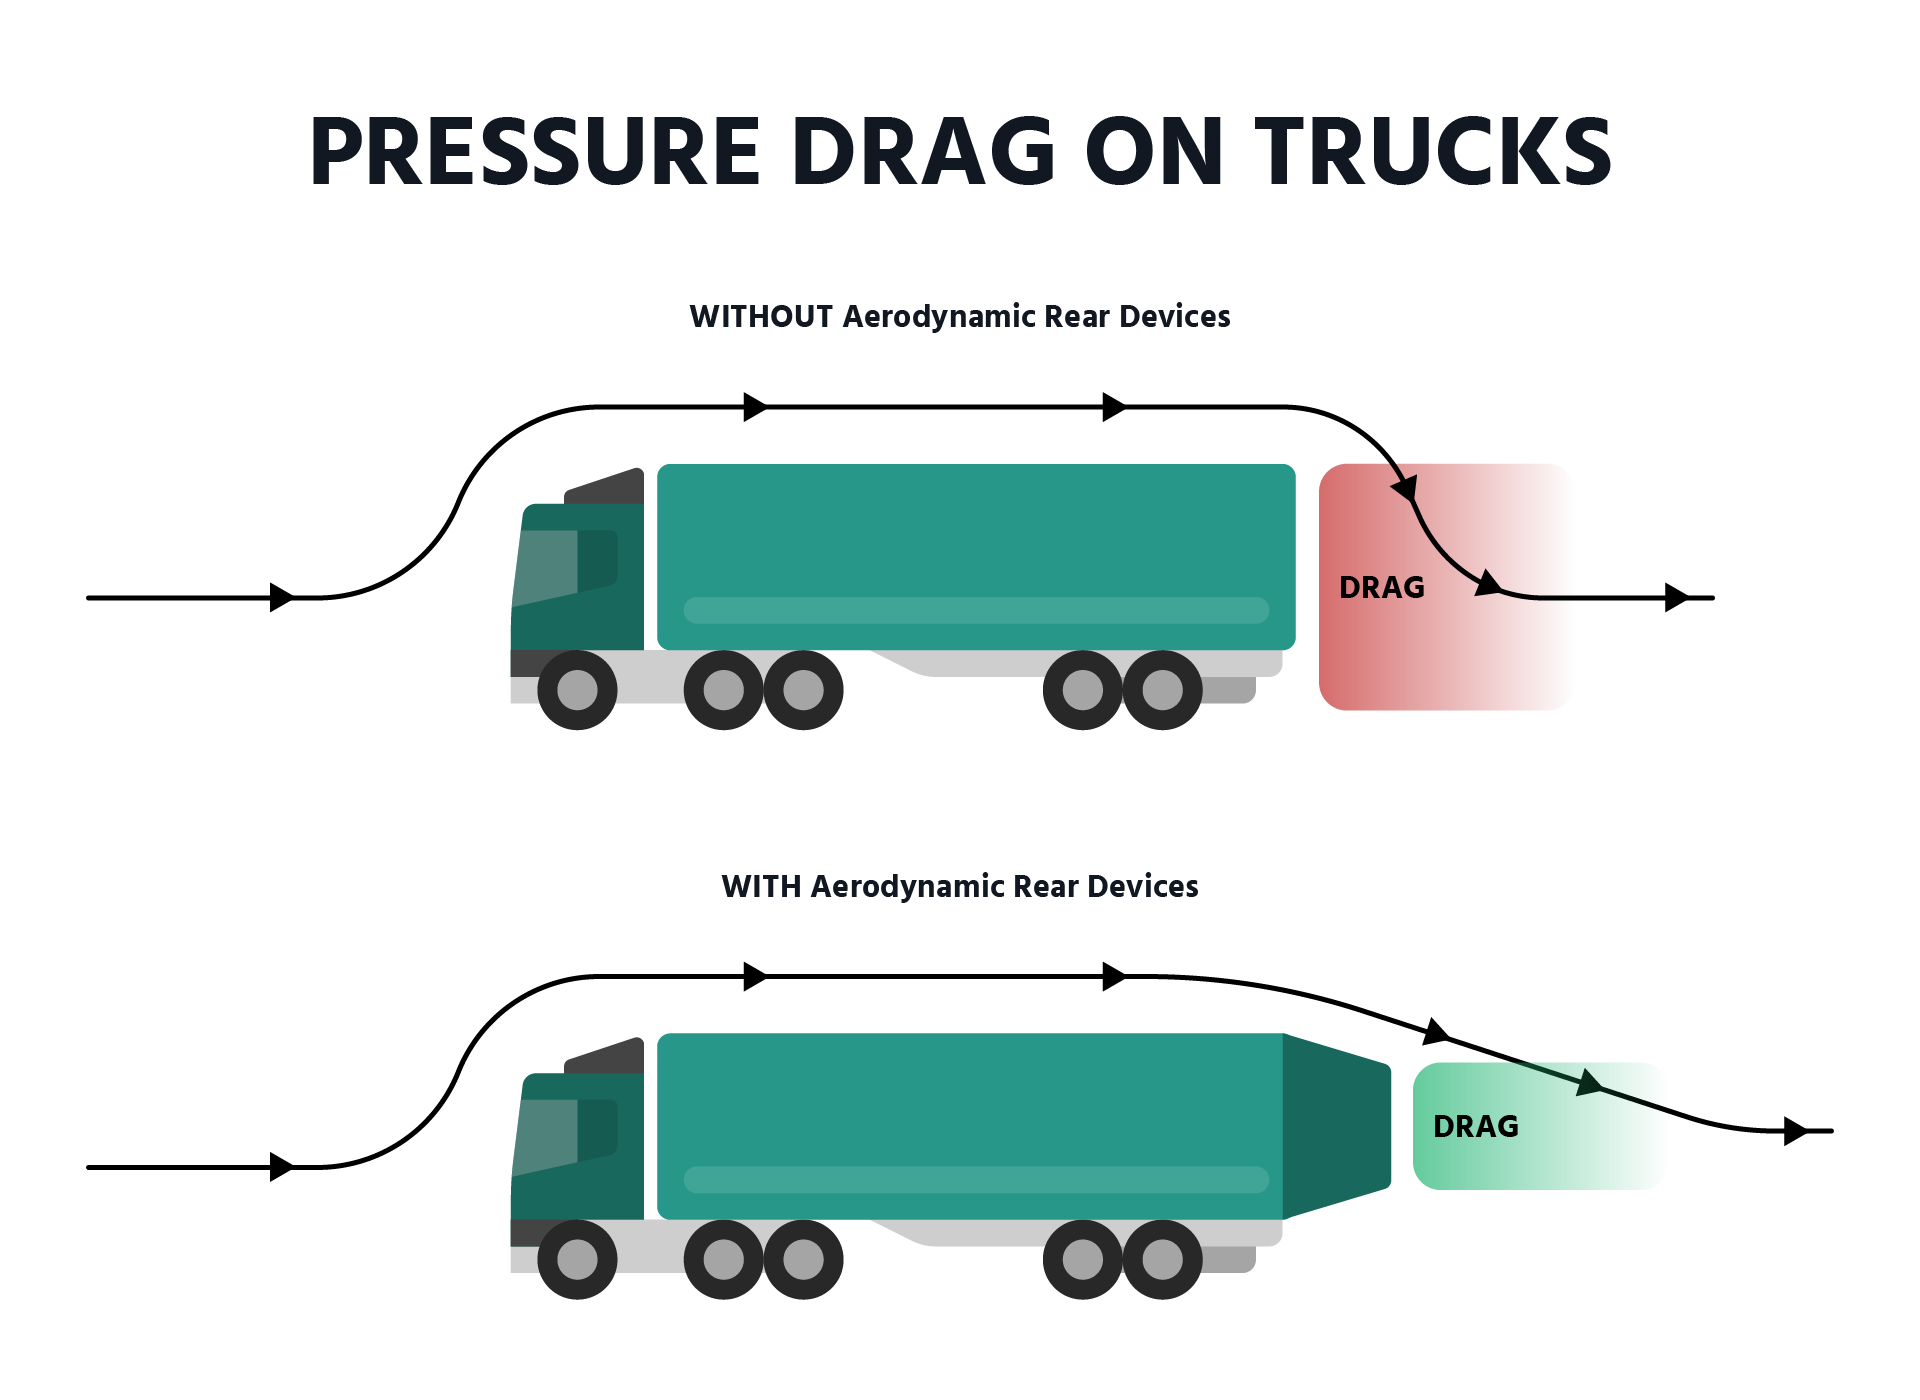 Aerodynamic-Rear-Devices-Pressure-Drag-on-Trucks-Graphic